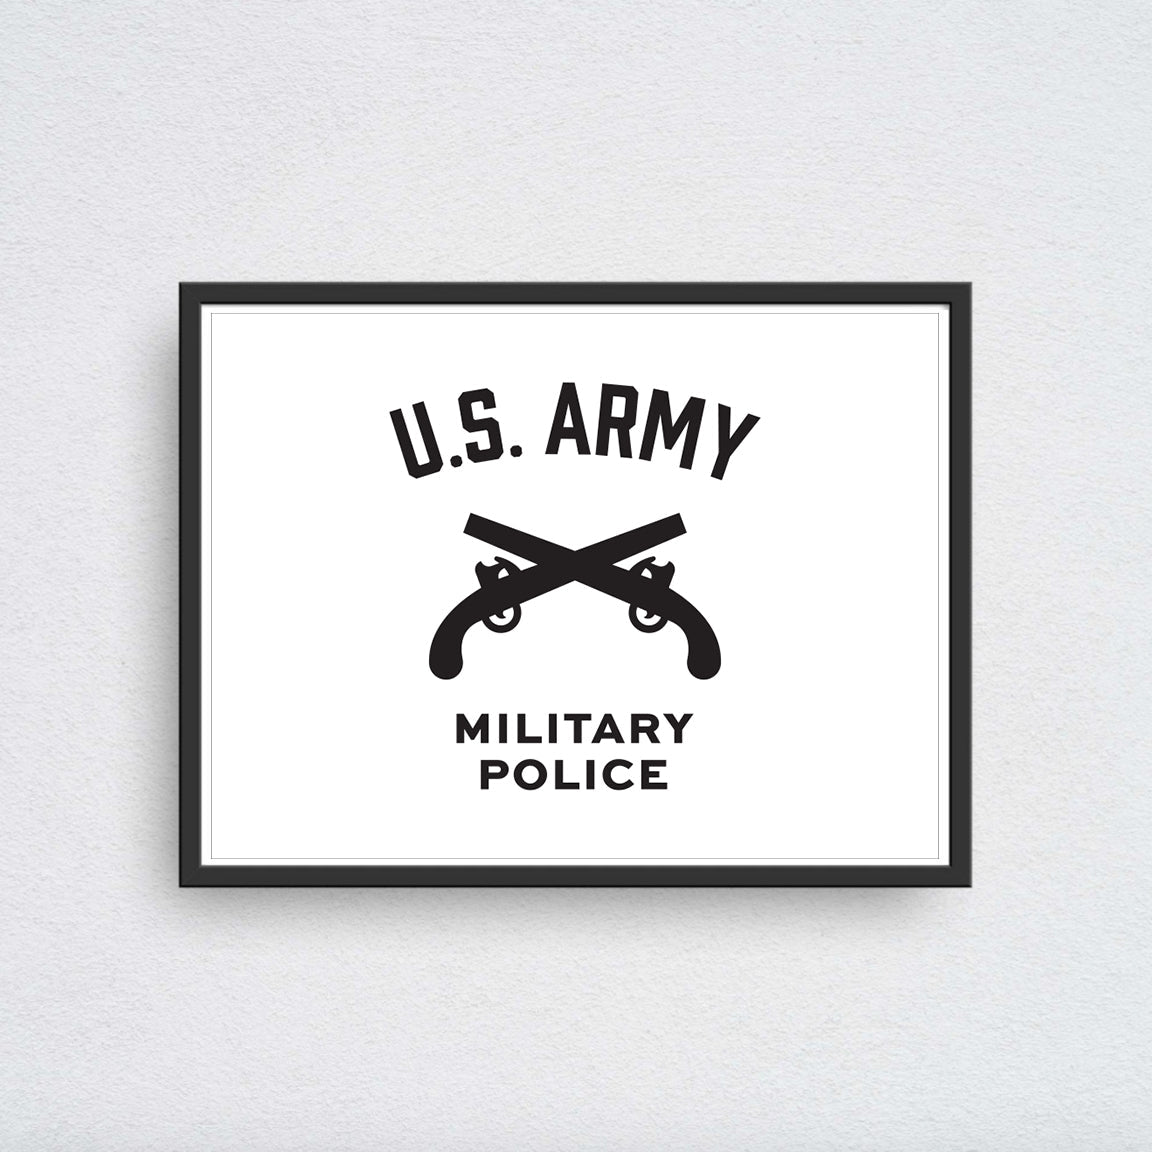 U.S. Army Military Police